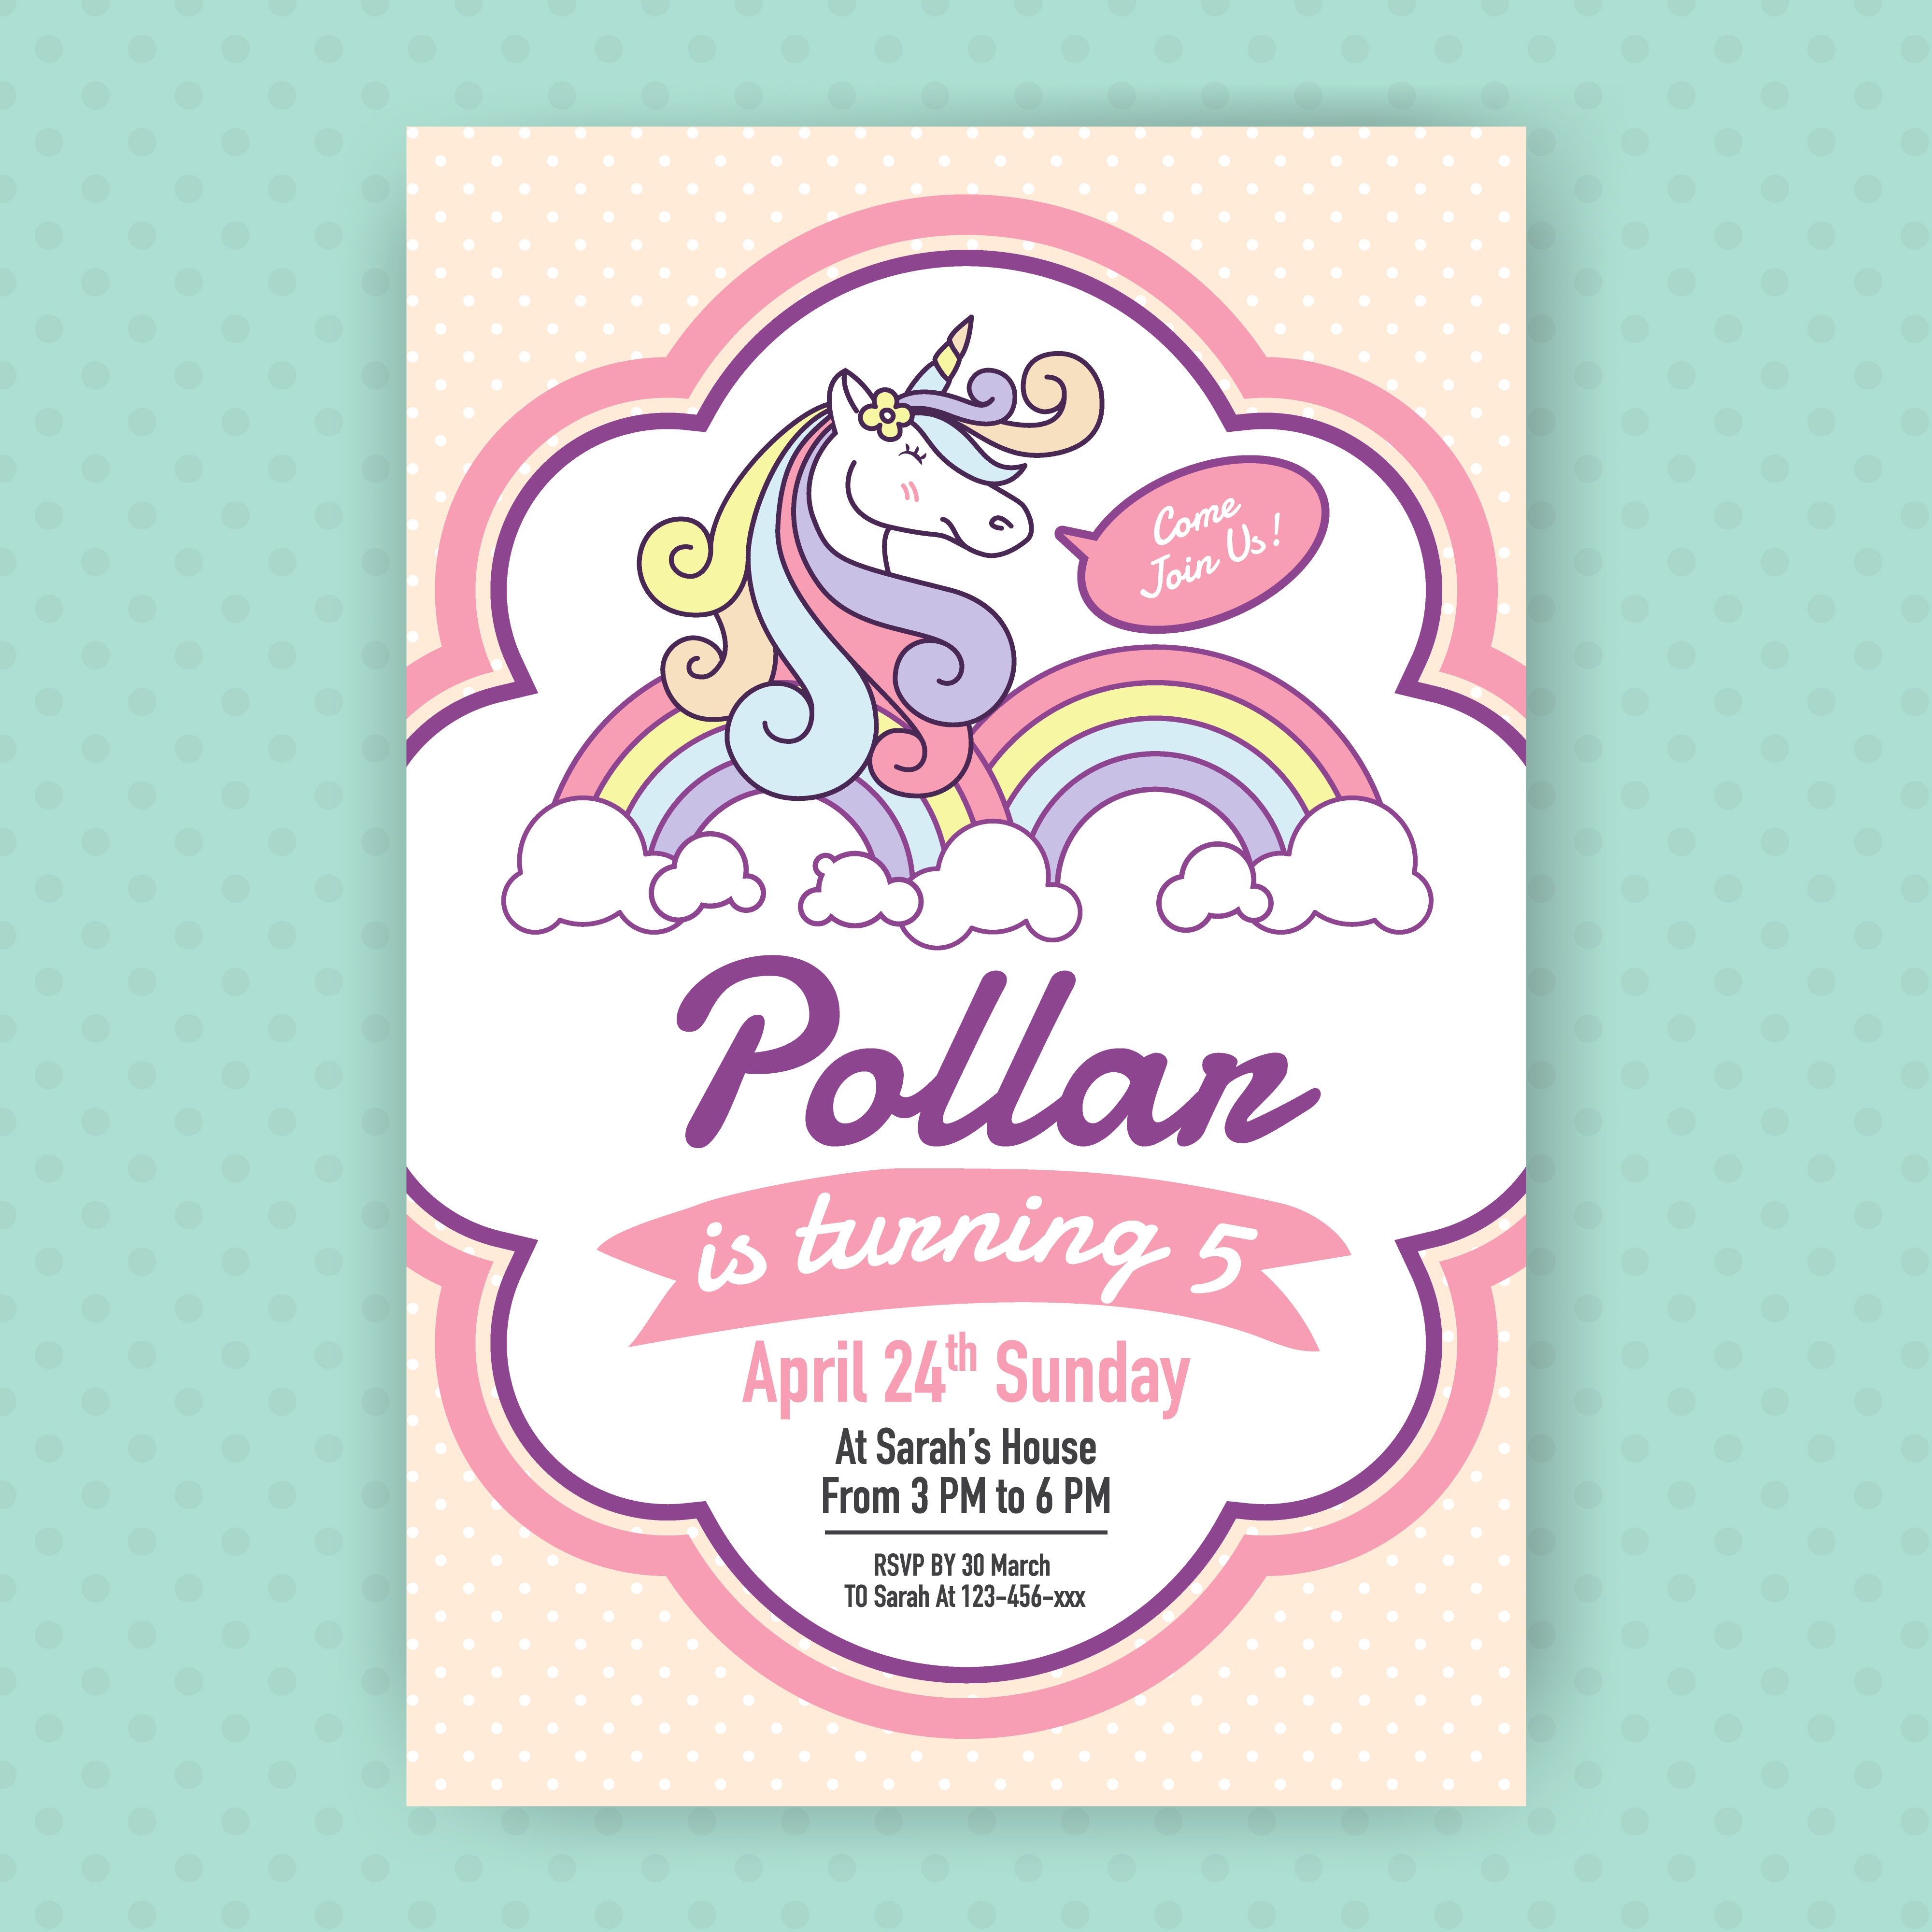 Wavejoe 12 Pack Unicorn Invitation Card with 12 Envelpoes and 12 Unicorn Stickers 